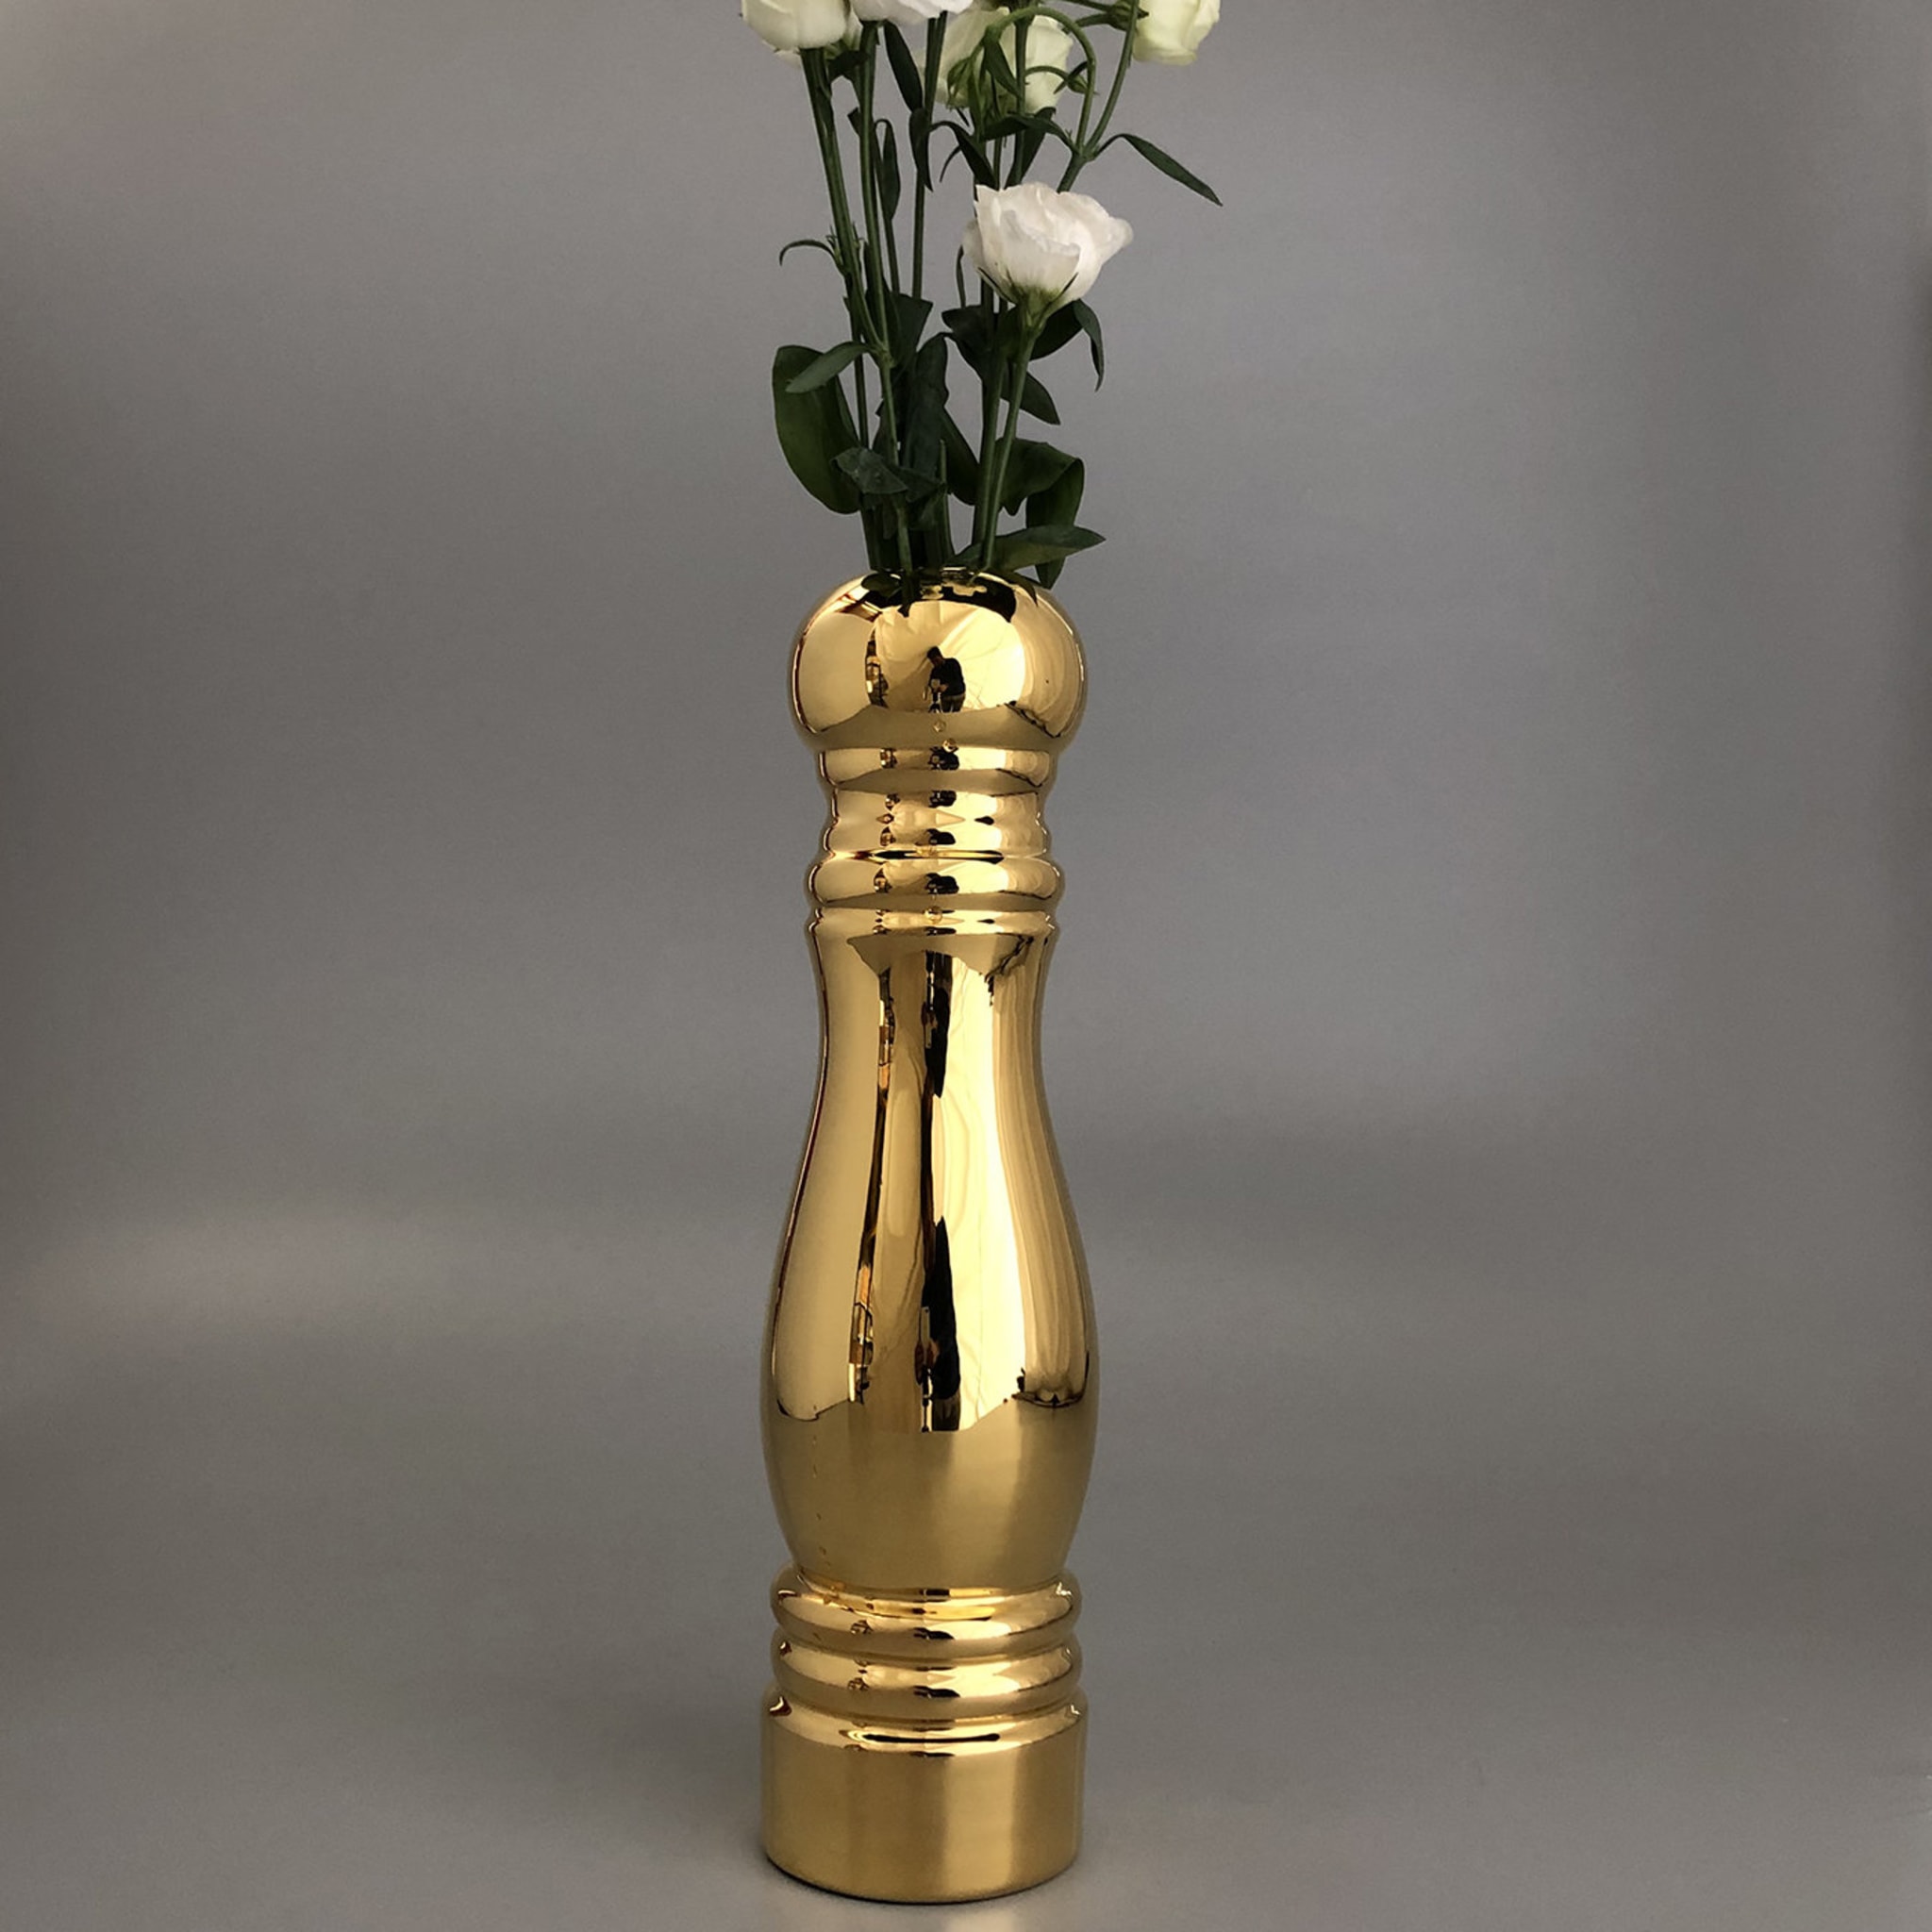 Macinapepe Brass Terracotta Flower Vase - Alternative view 1